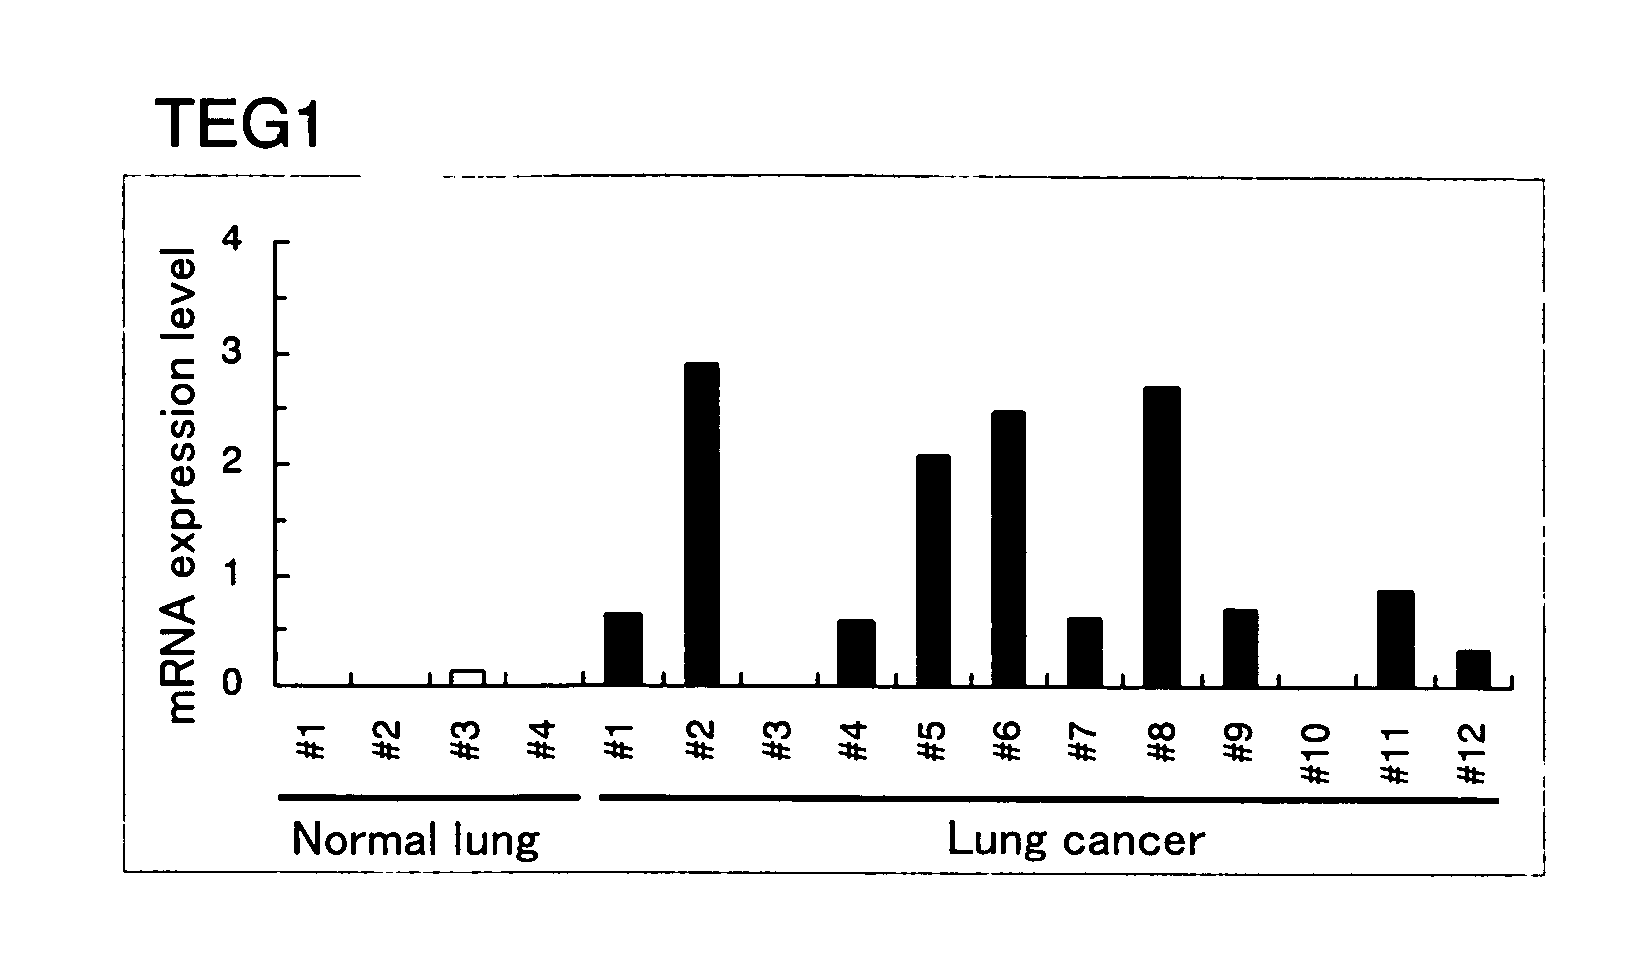 Gene Overexpressed in Cancer